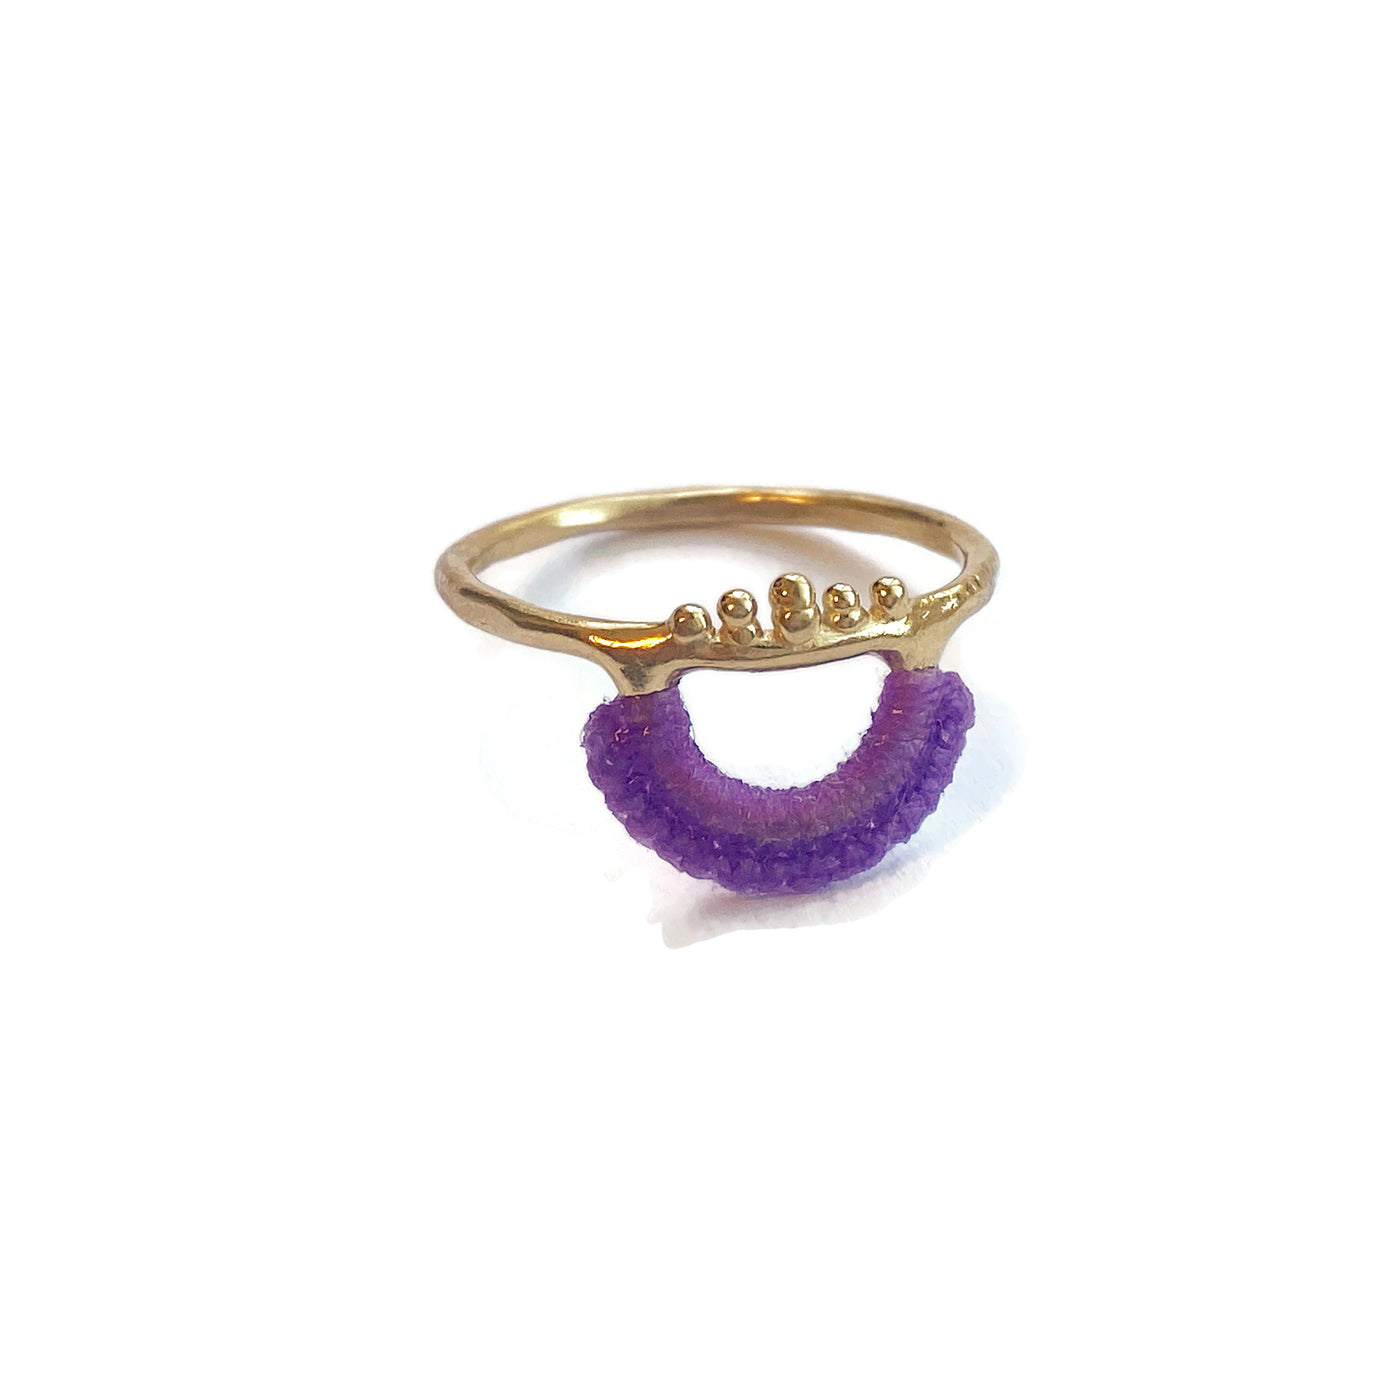 Baras Ring // Lilac